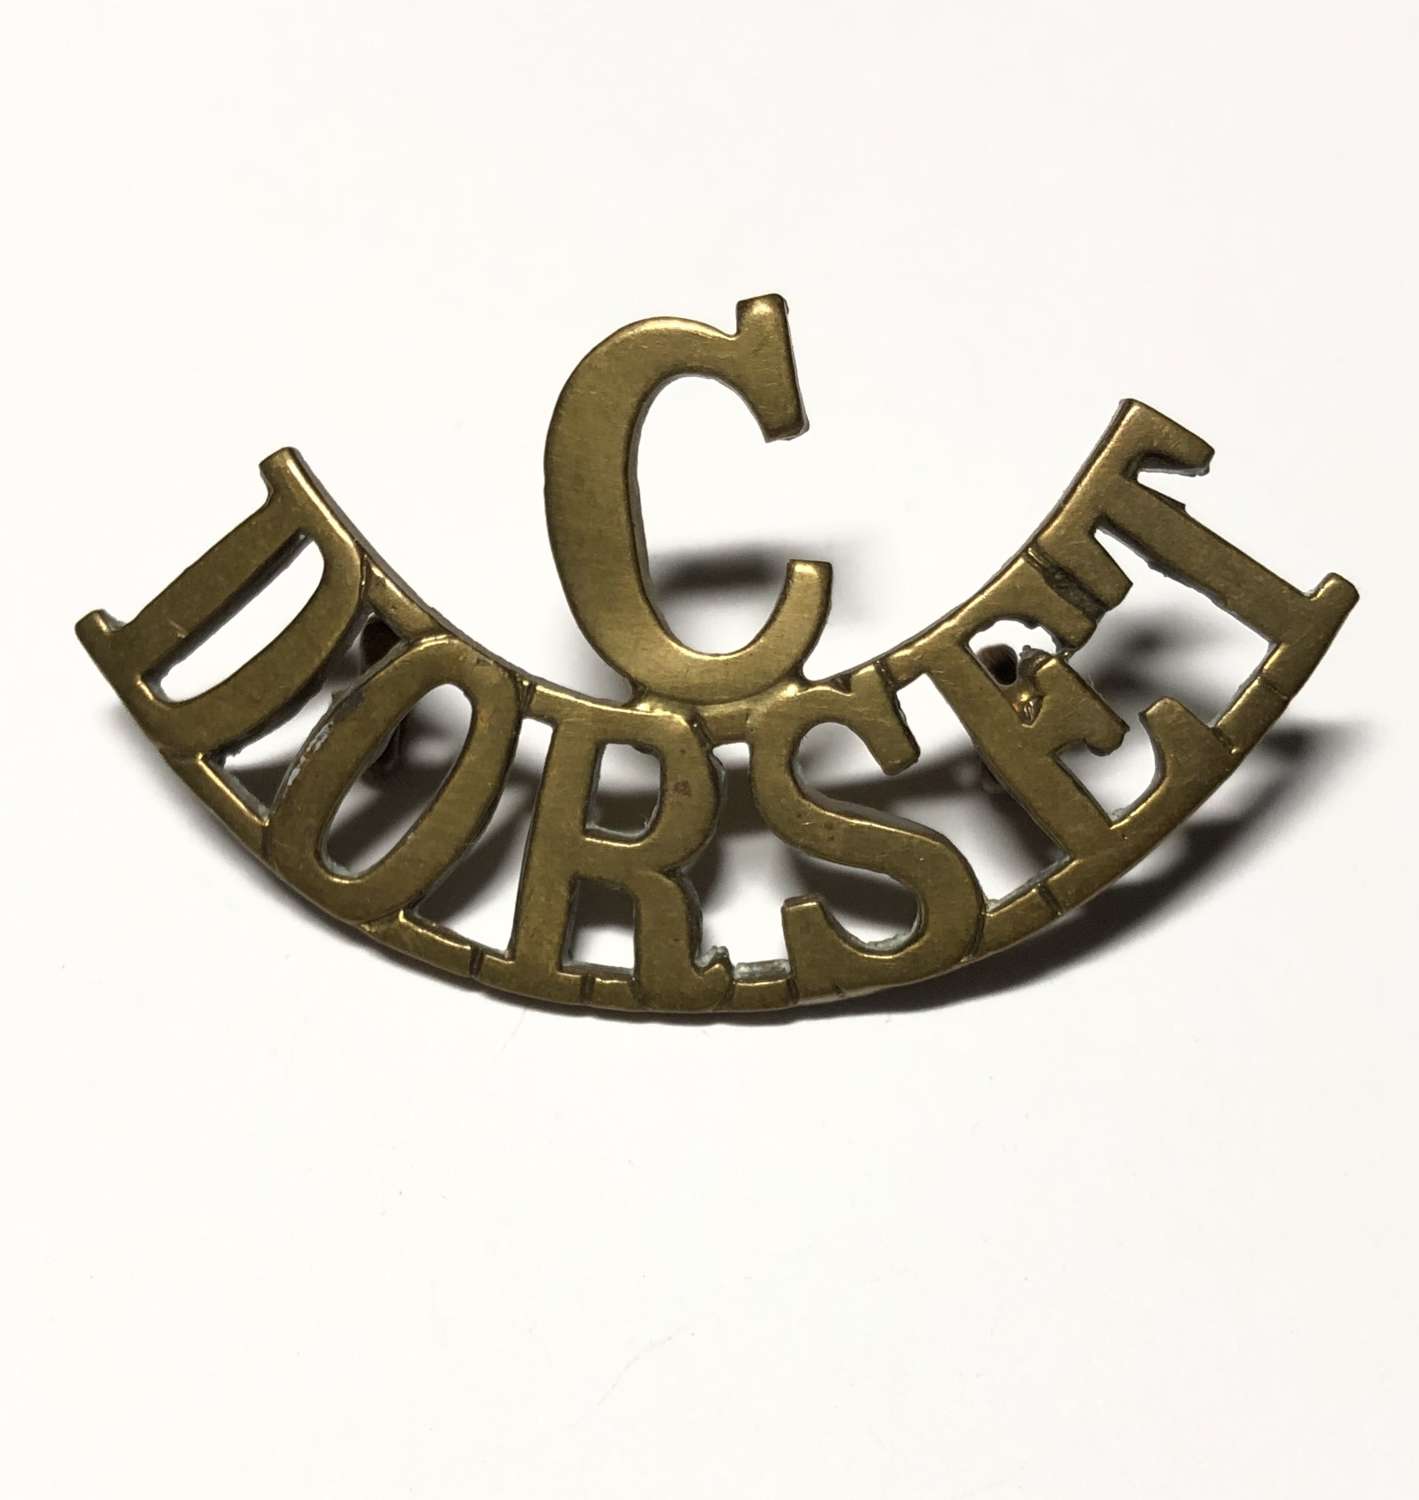 C / DORSET Cadet shoulder title